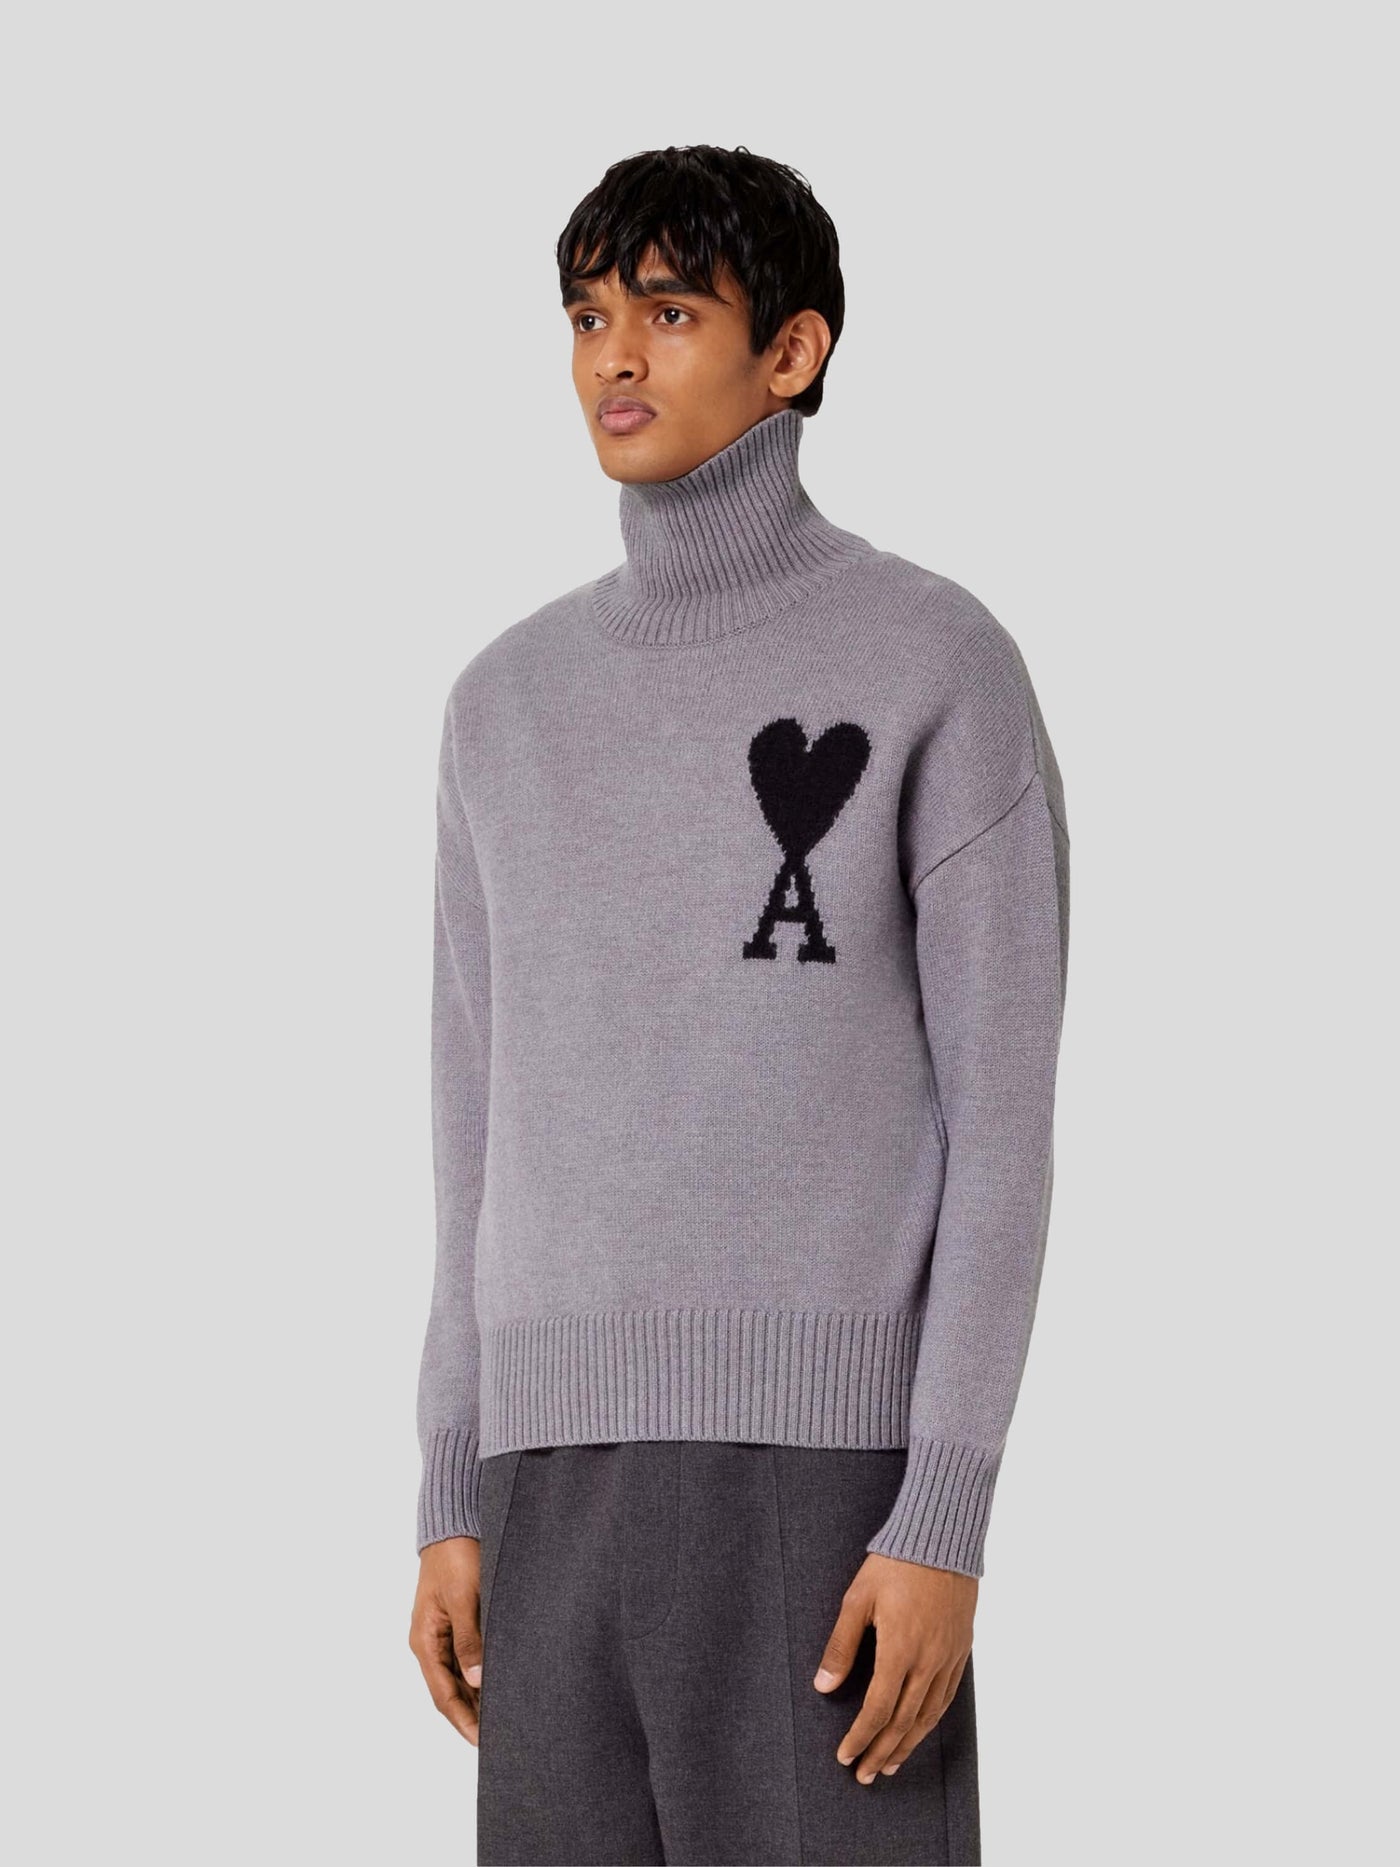 AMI Paris Pullover & Strick | de Coeur Stehkragen Pullover grau | UKS402.018 057 grey / ADAM/EVE